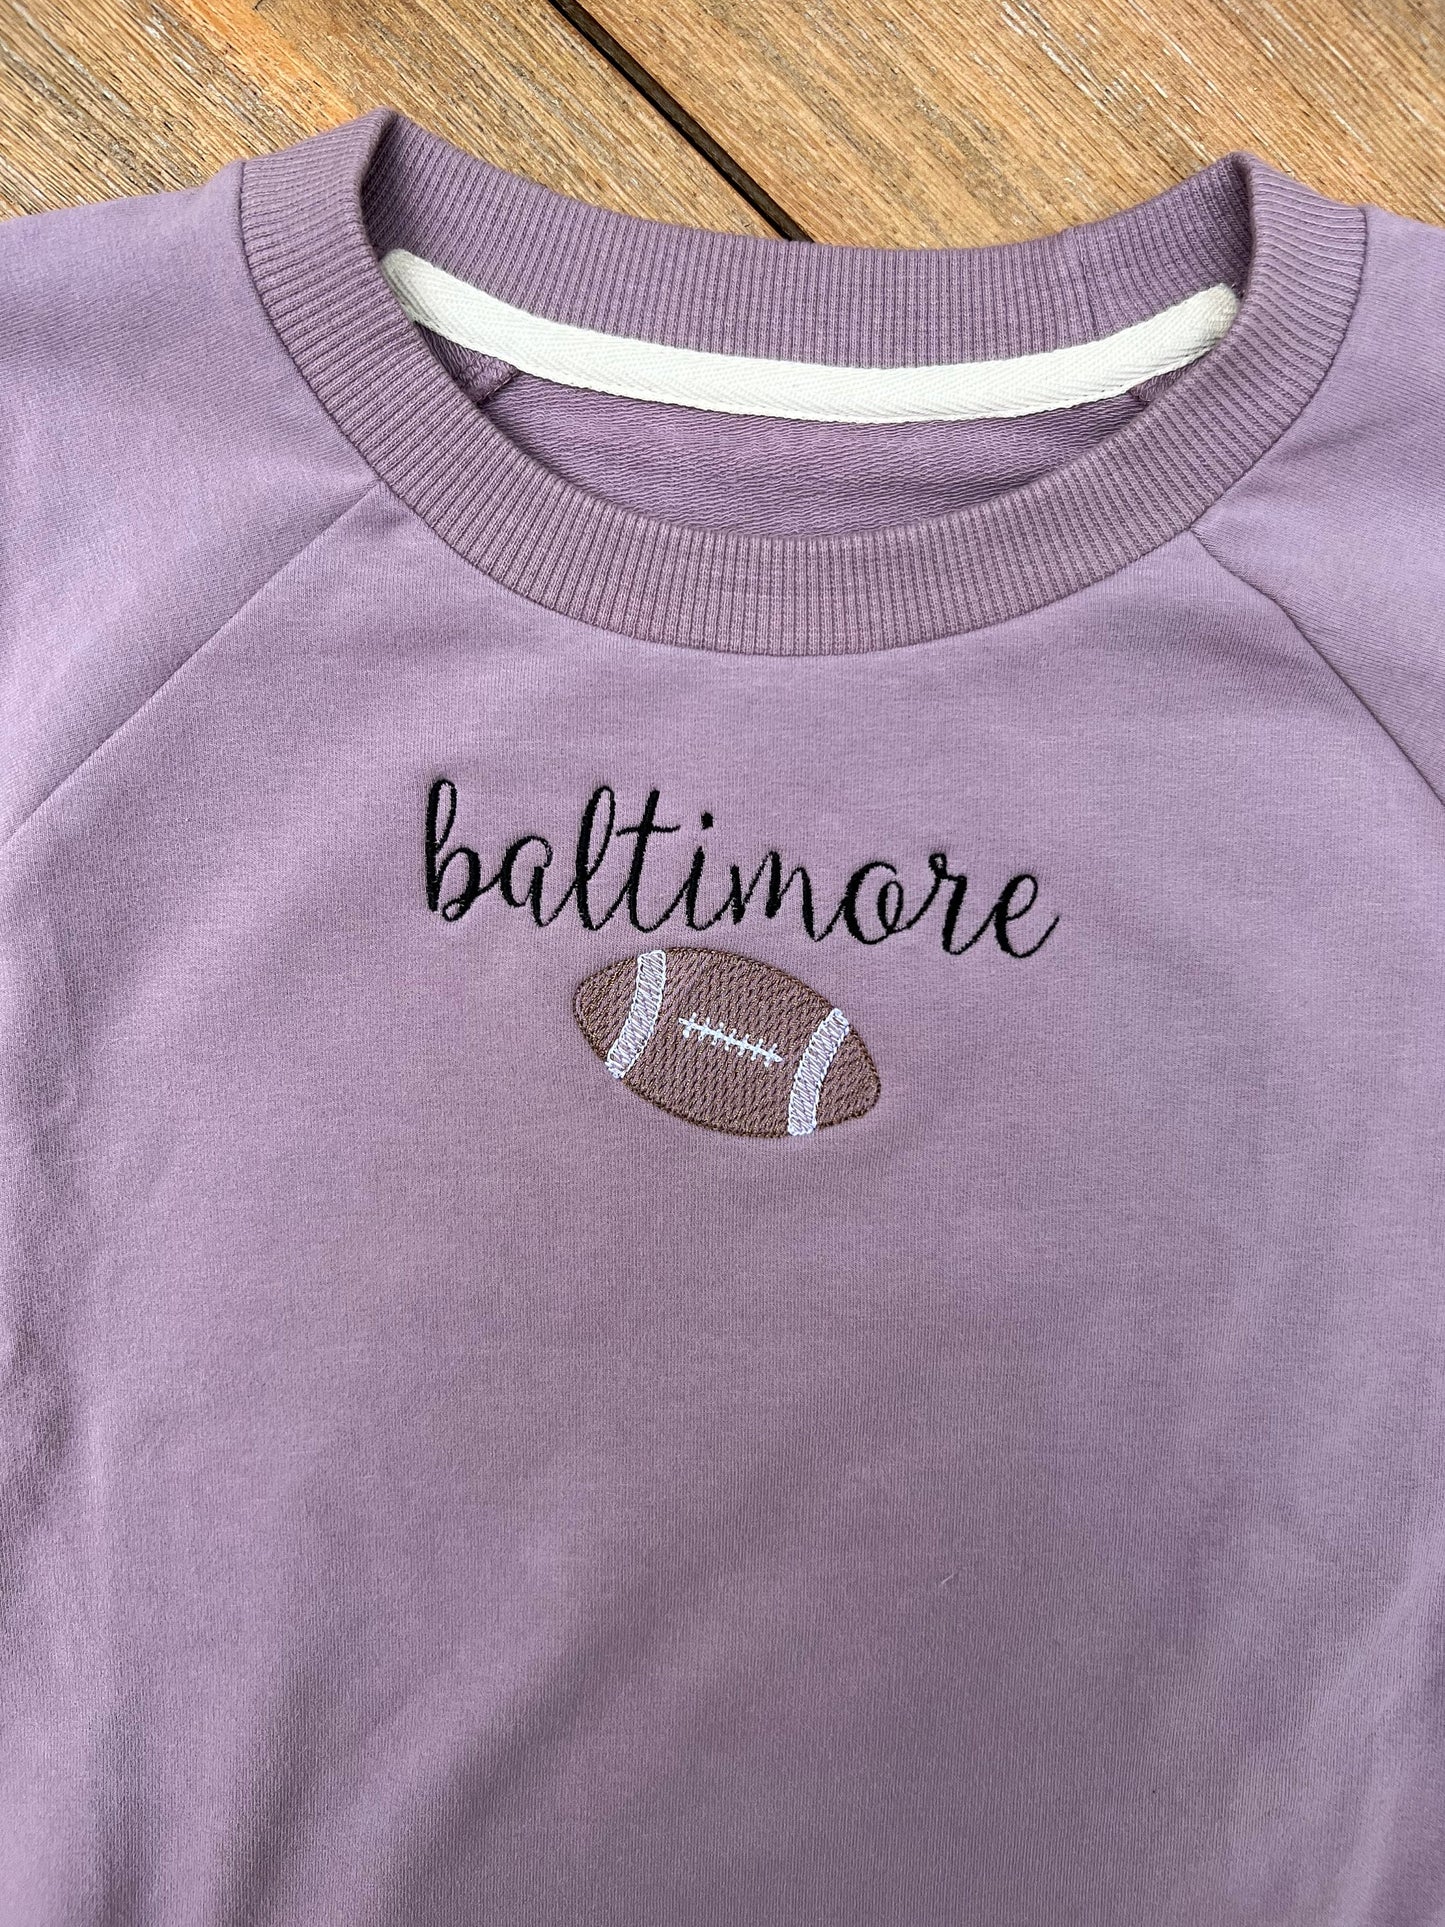 Toddler Football Sweatshirt Football Season Baltimore Football